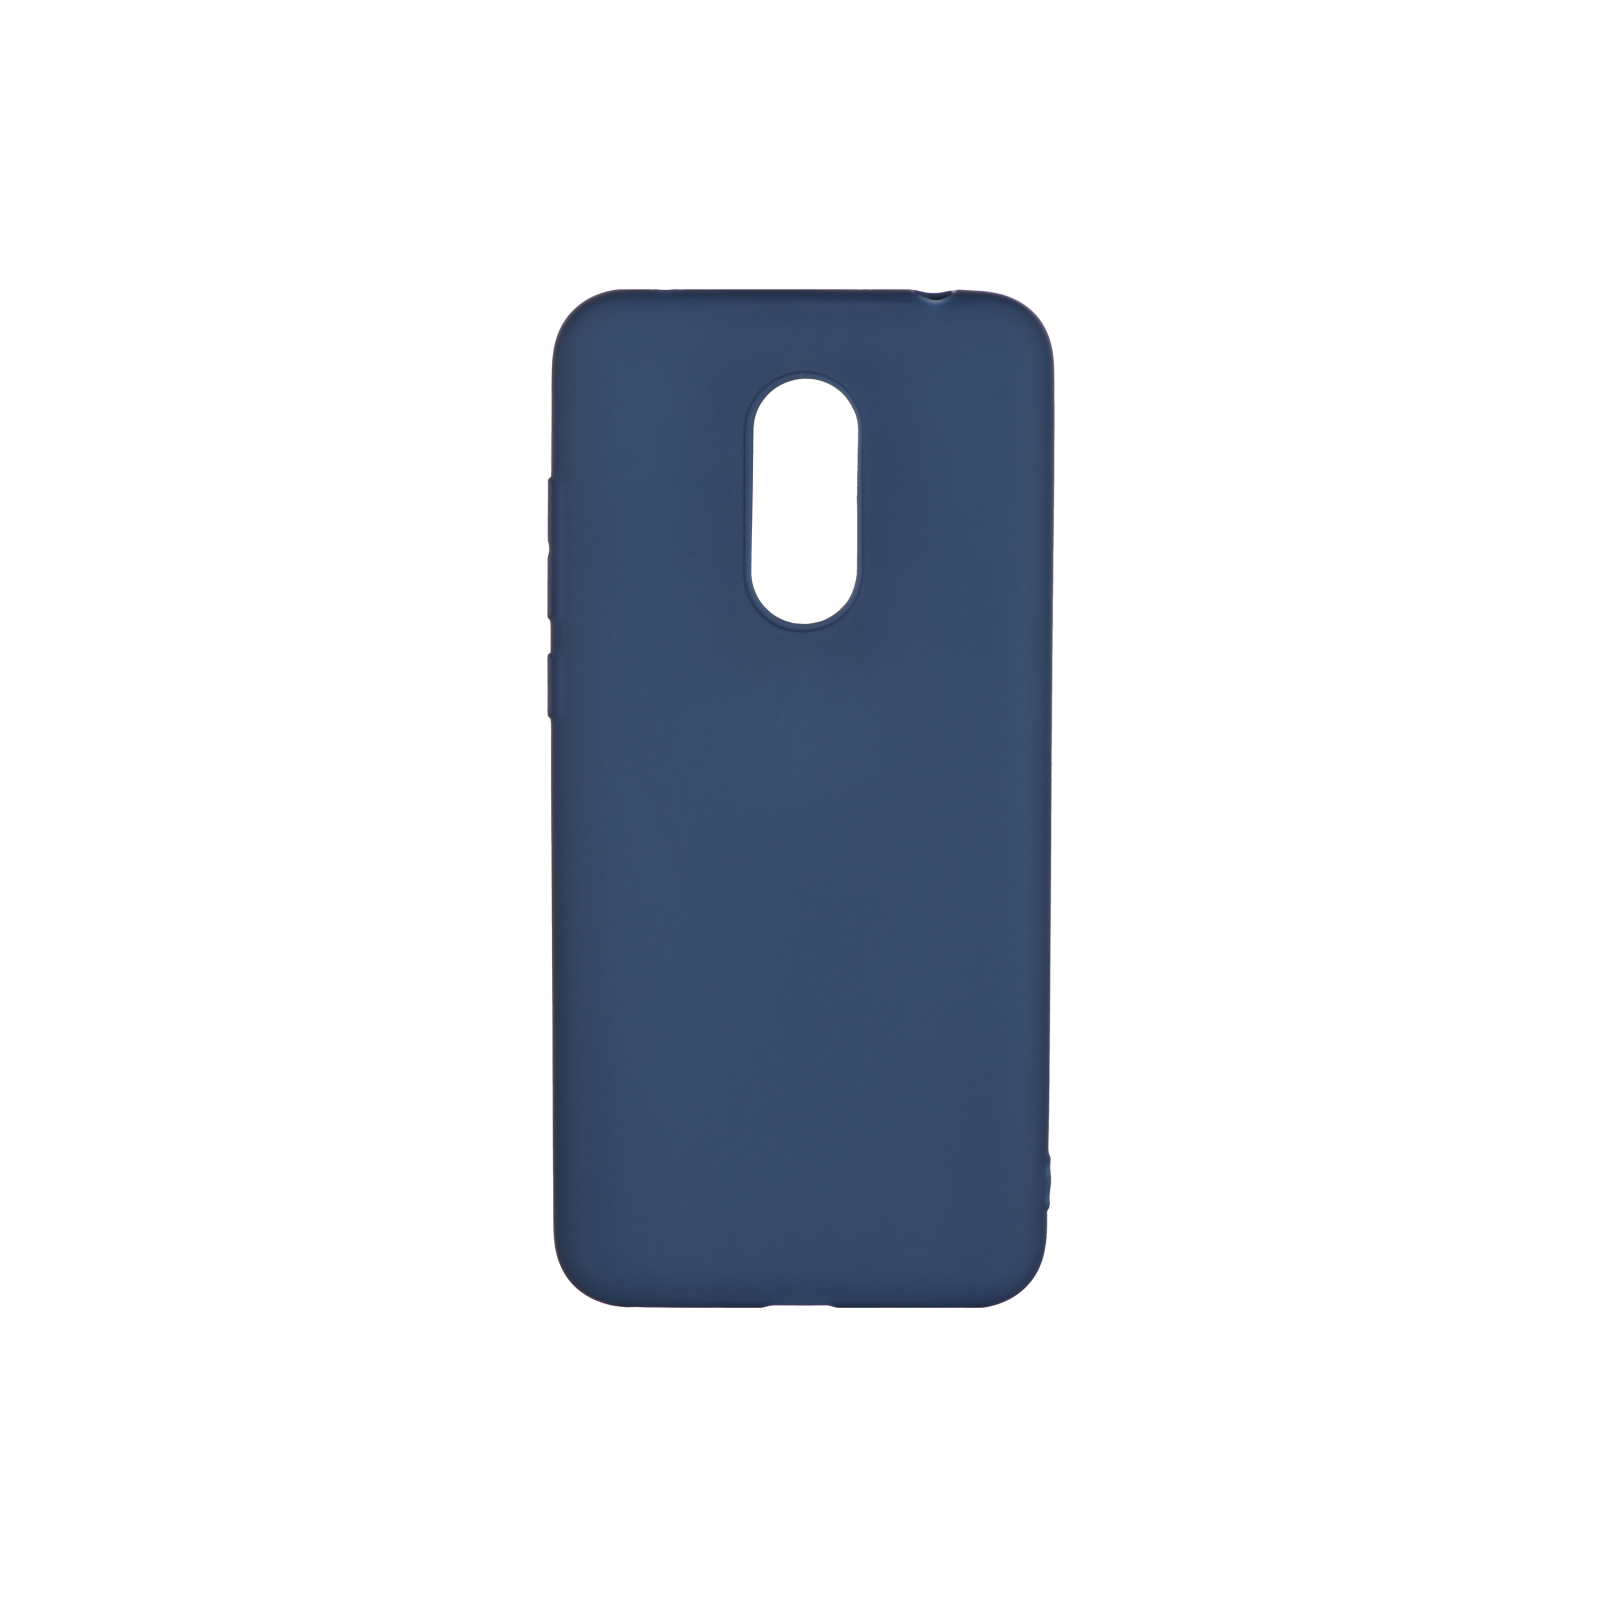 Чехол для мобильного телефона 2E Xiaomi Redmi 5 Plus, Soft touch, Navy (2E-MI-5P-NKST-NV)